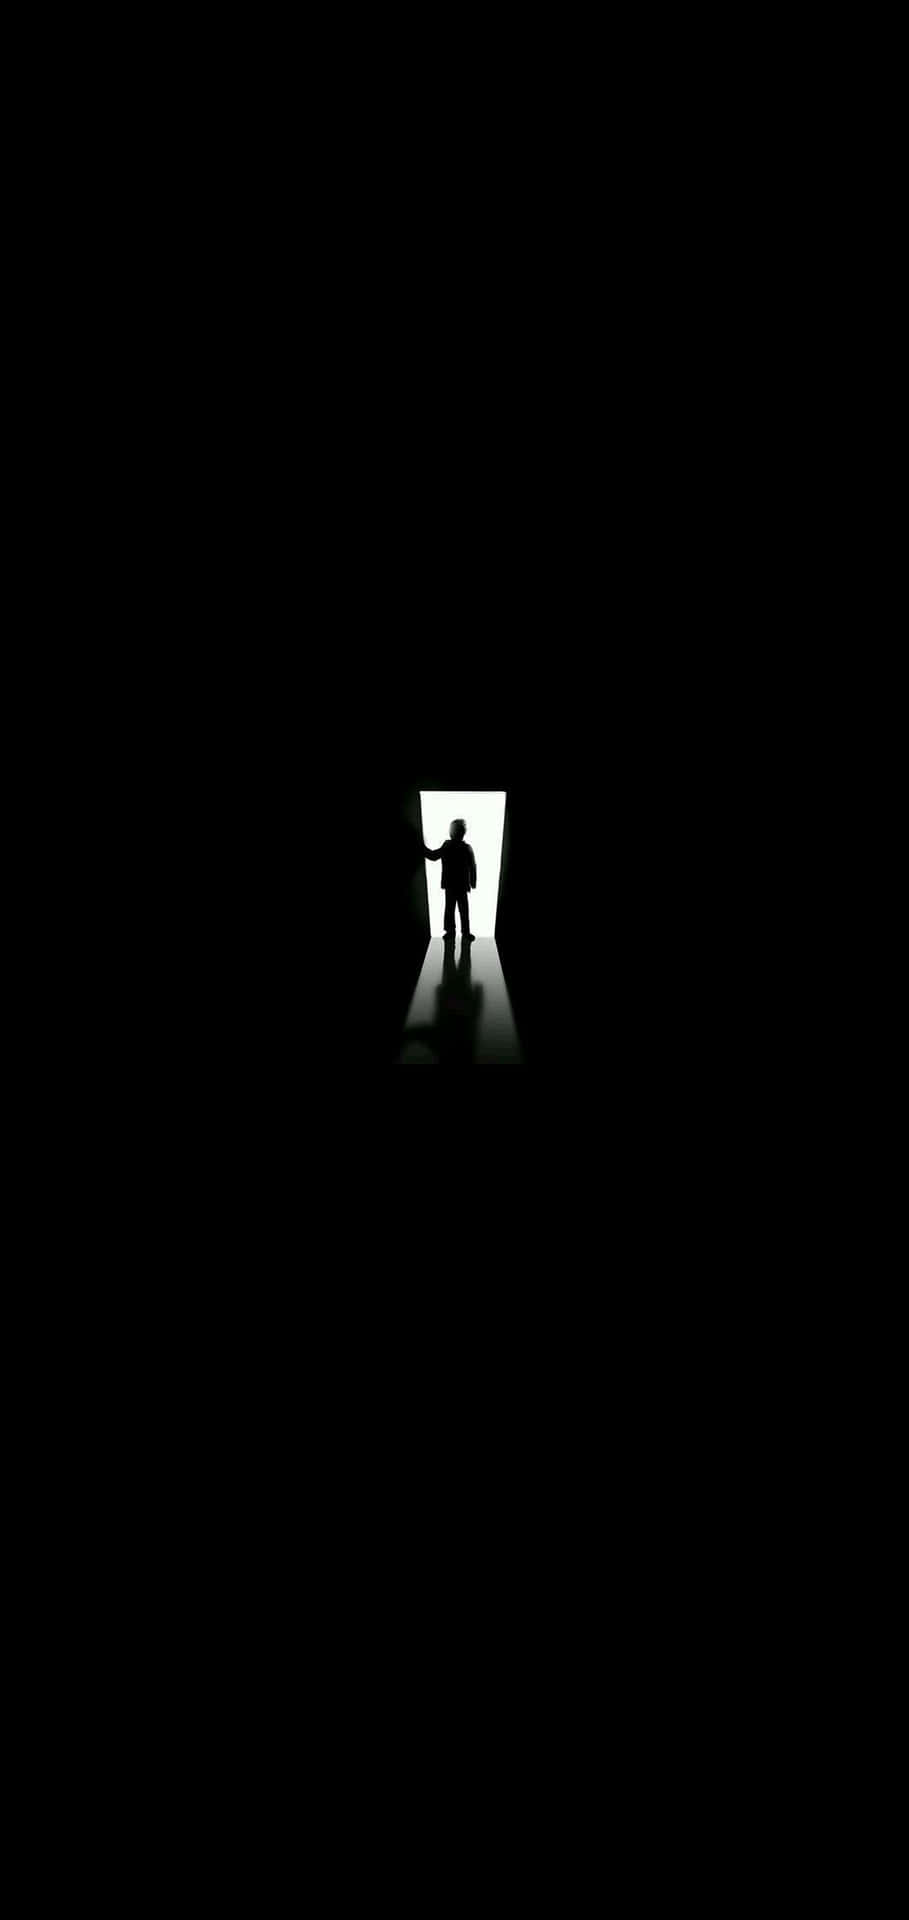 A Silhouette Of A Person In The Dark